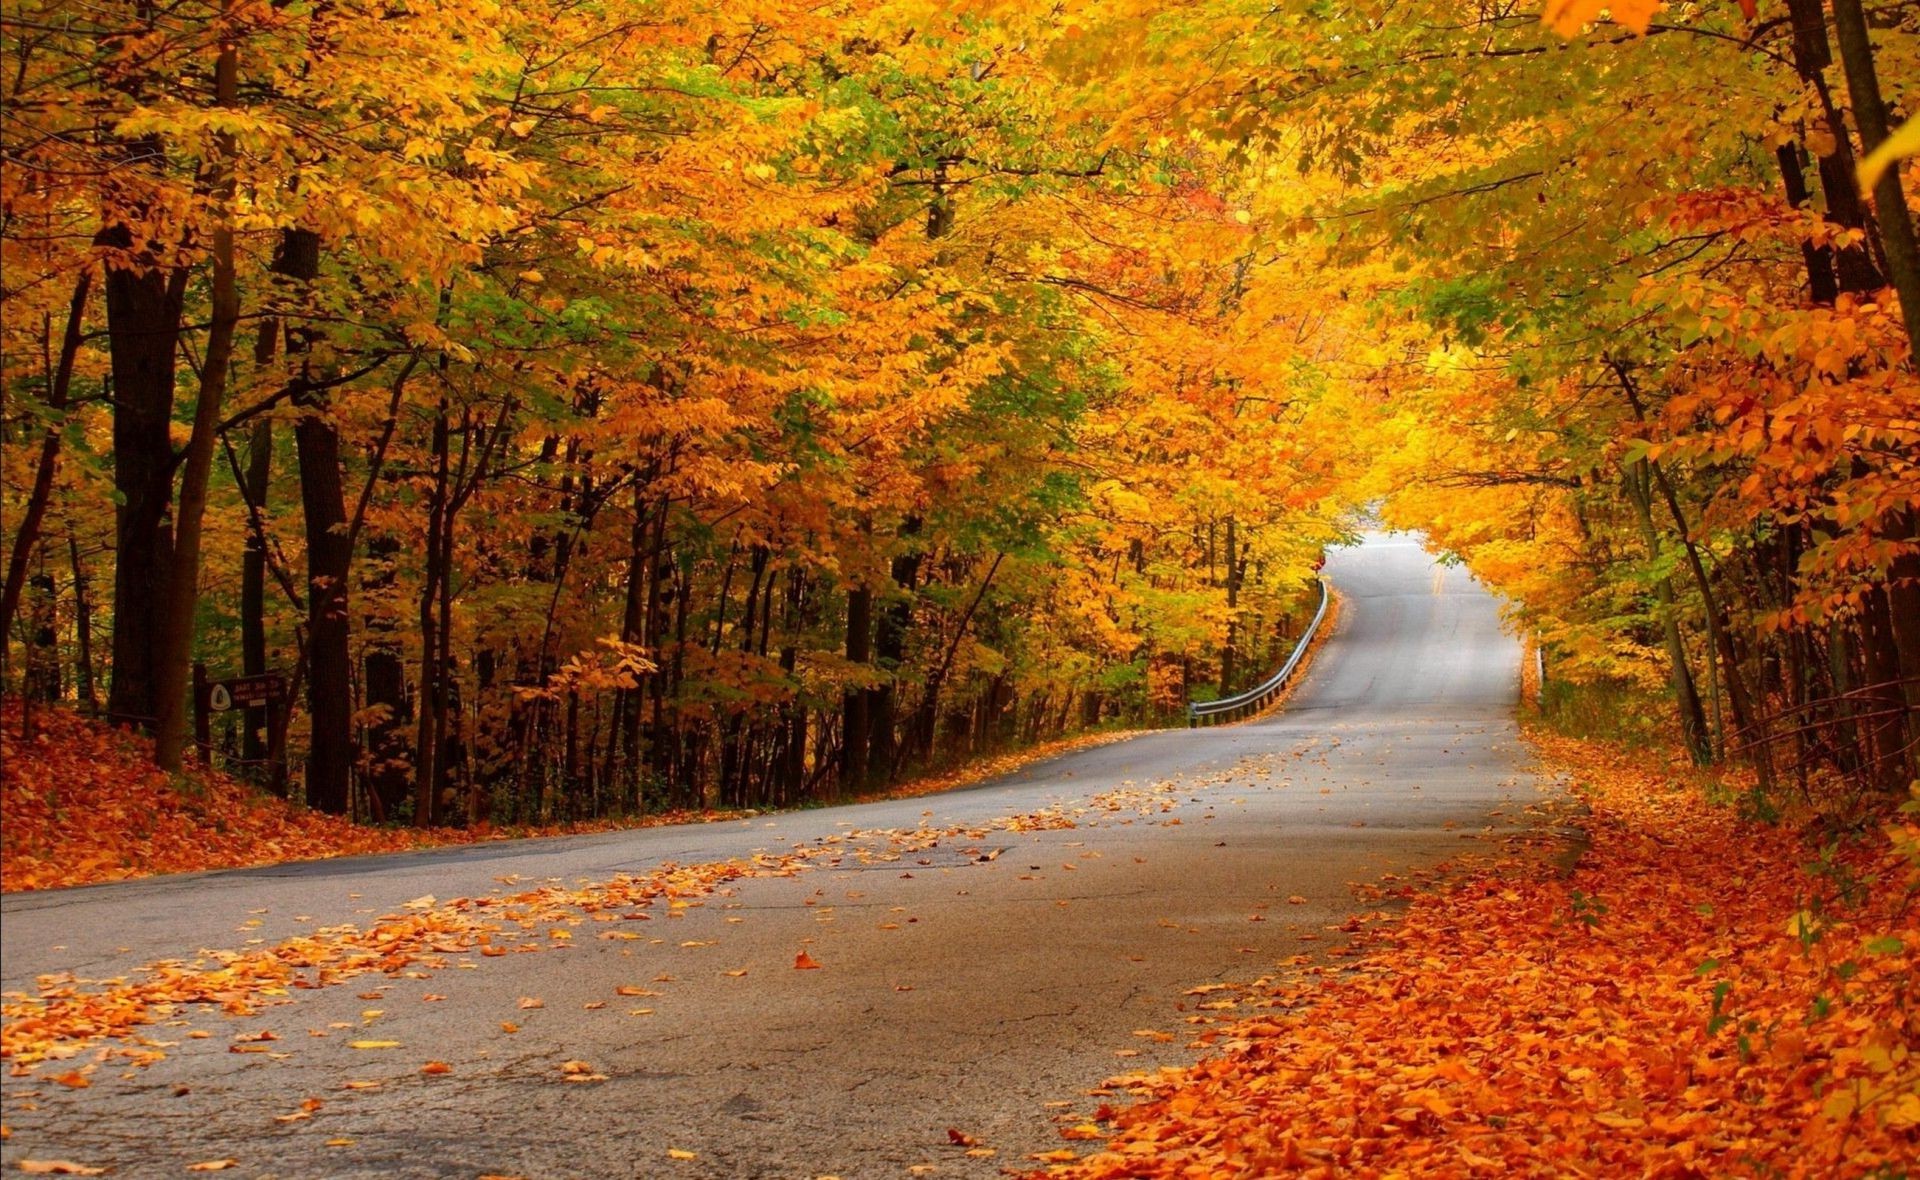 autumn fall leaf maple nature tree wood road landscape outdoors season scenic park